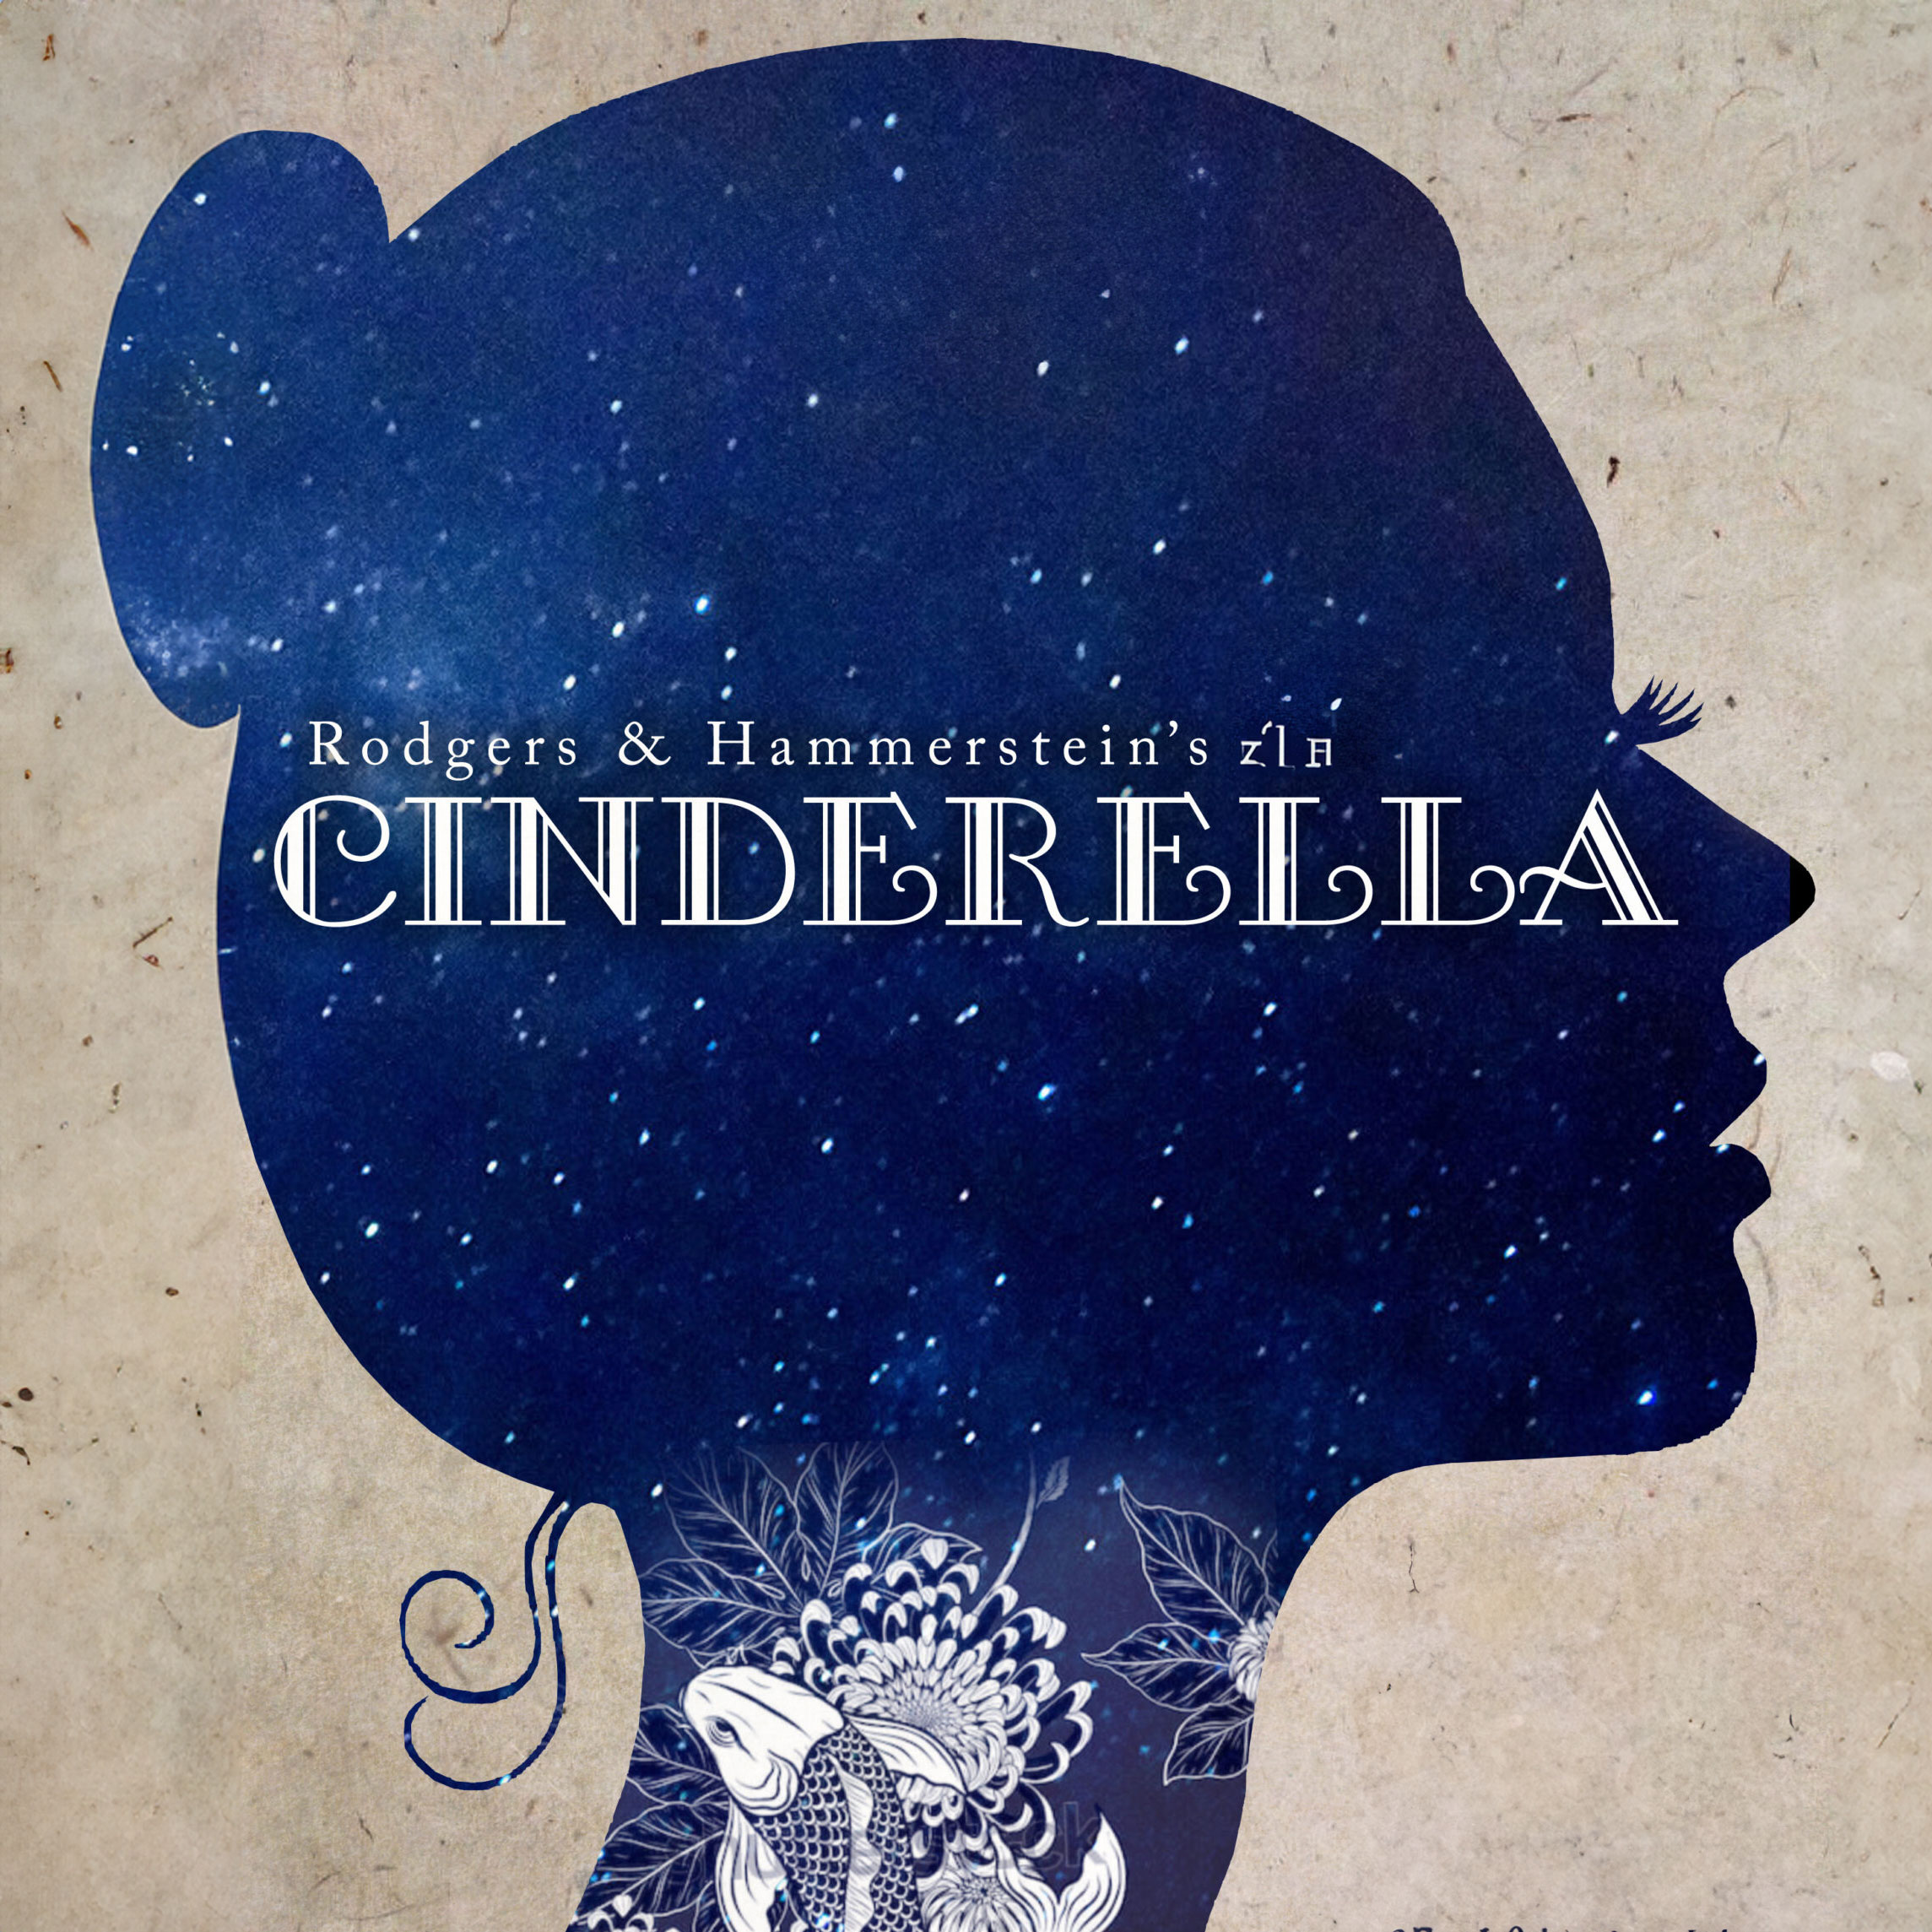 Cinderella Youth Edition Musical Theatre Workshop